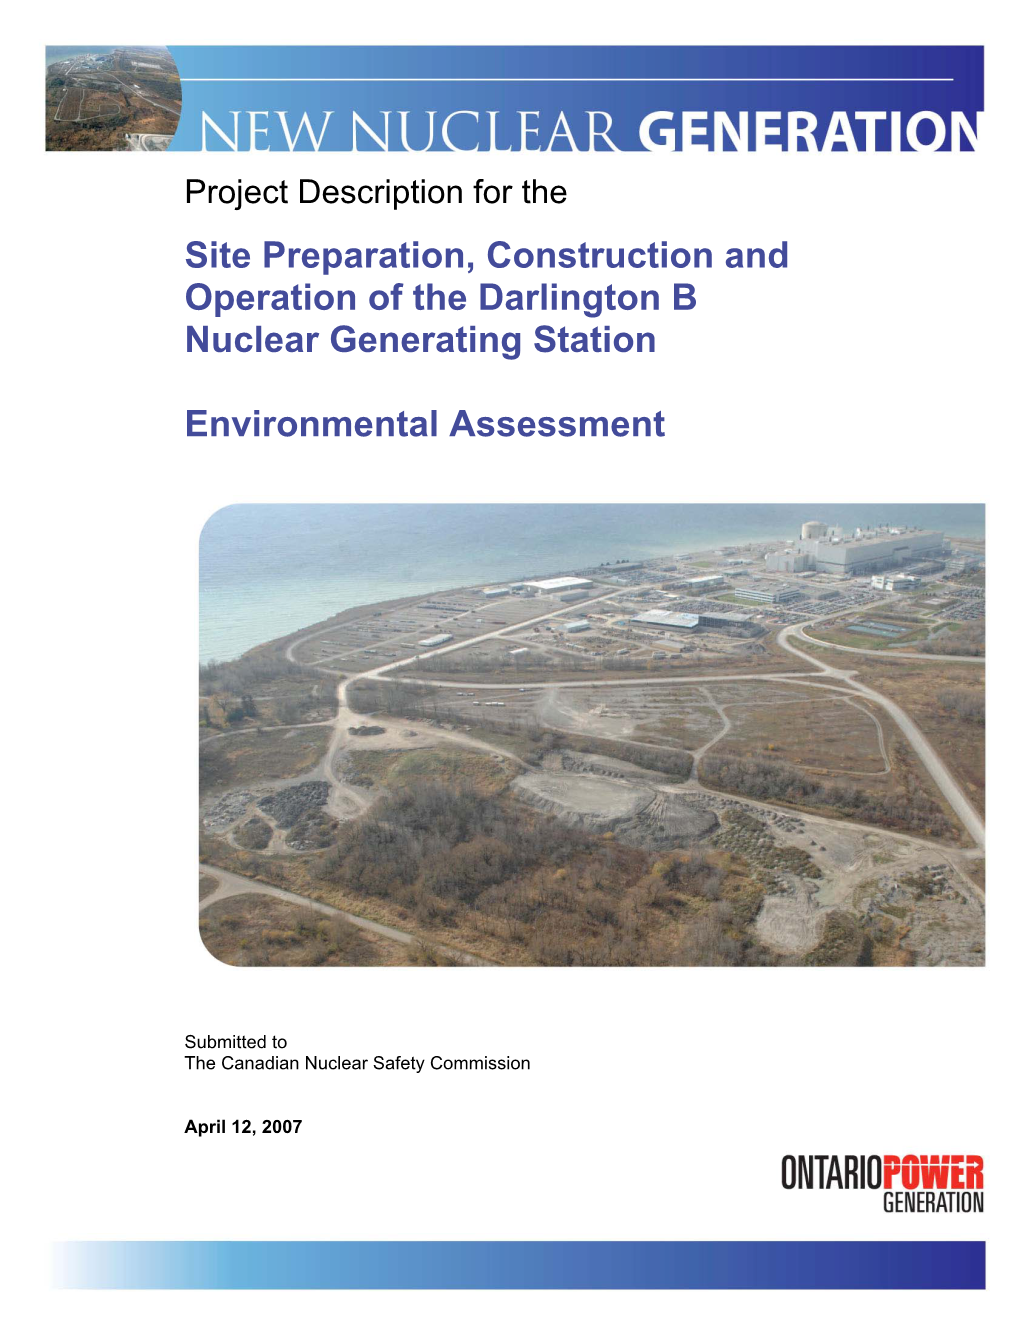 Darlington B Nuclear Generating Station